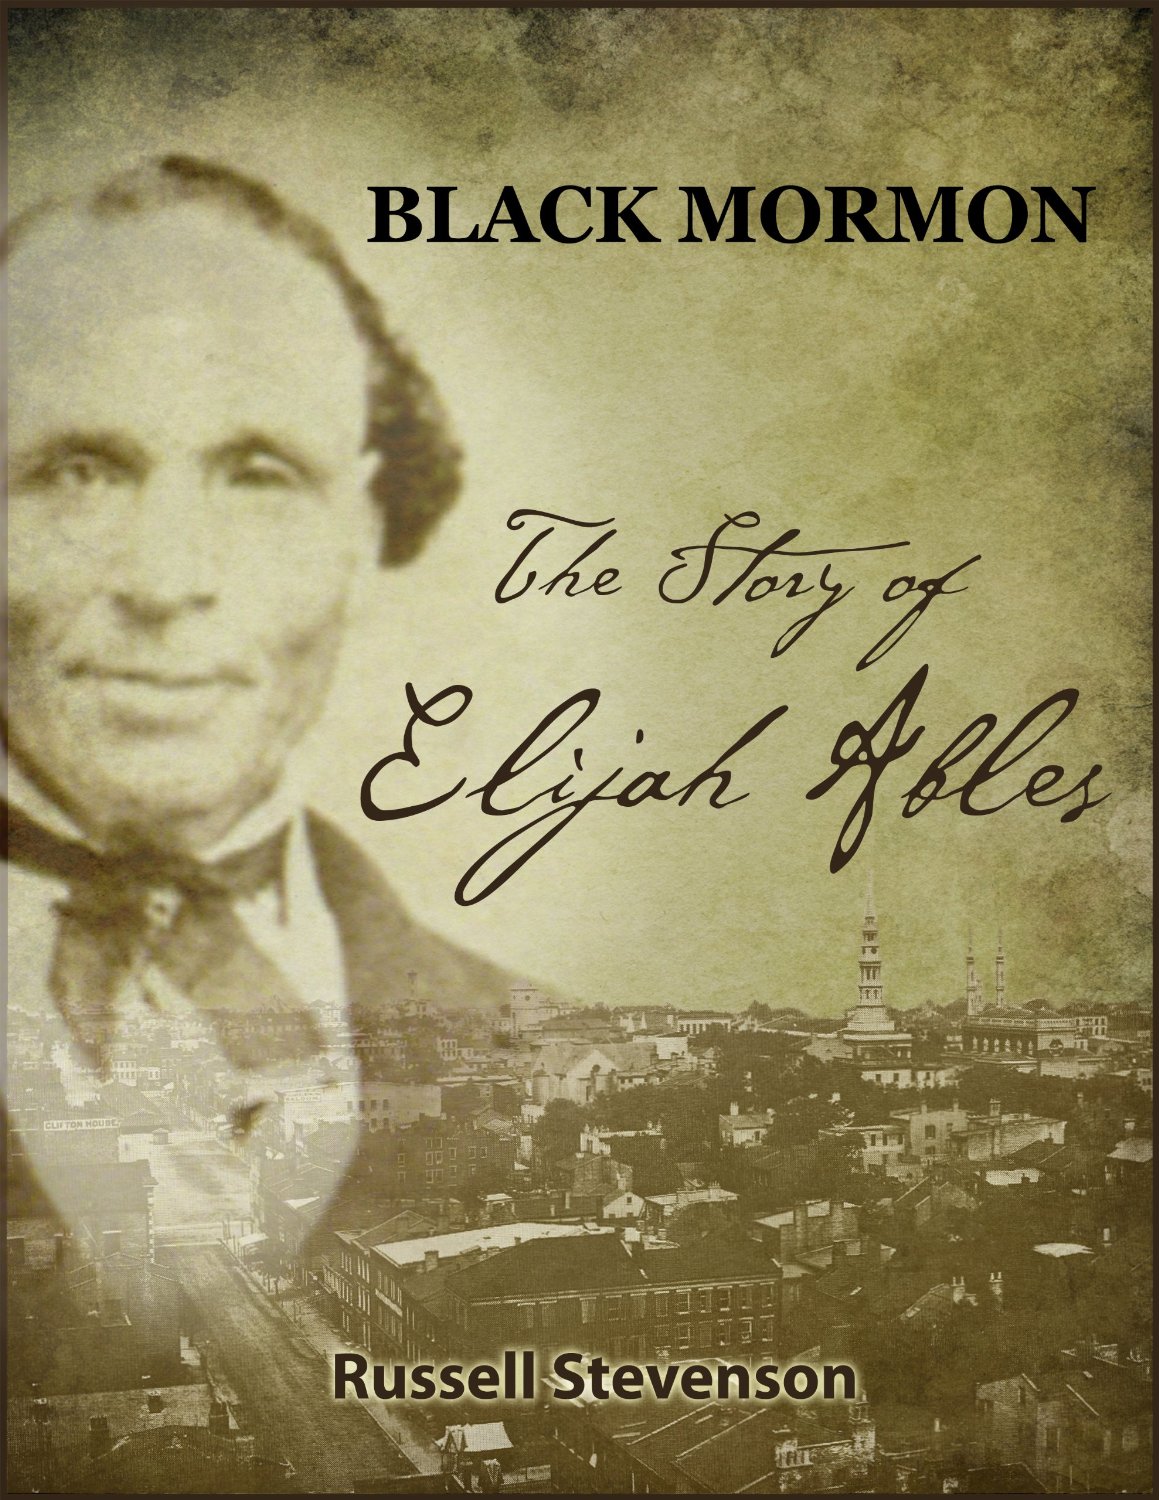 060-061: Elijah Abel – Early Black Mormon Priesthood Holder